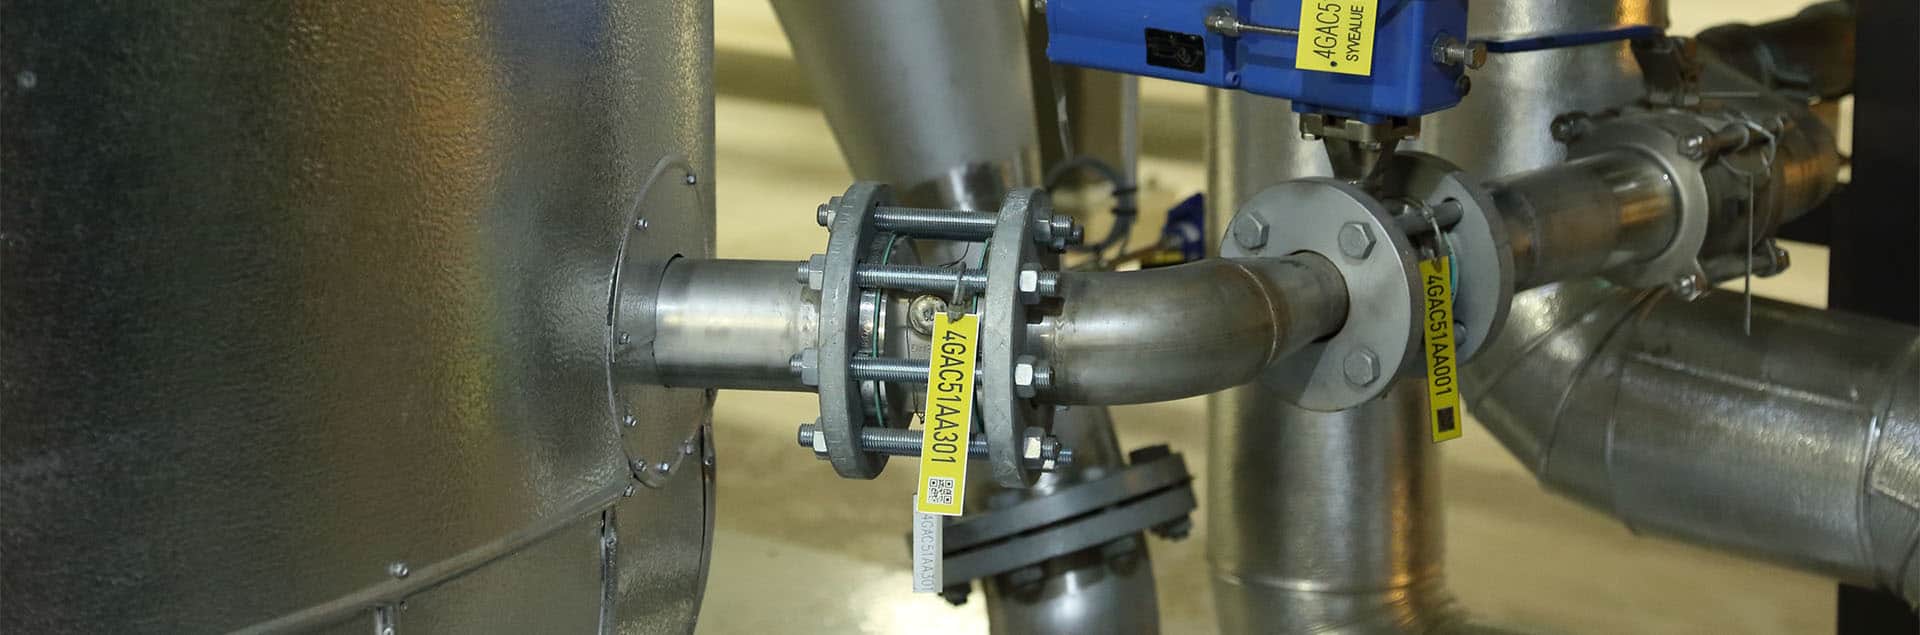 Neles™ RotaryGlobe™ control valve, series ZX | Valmet